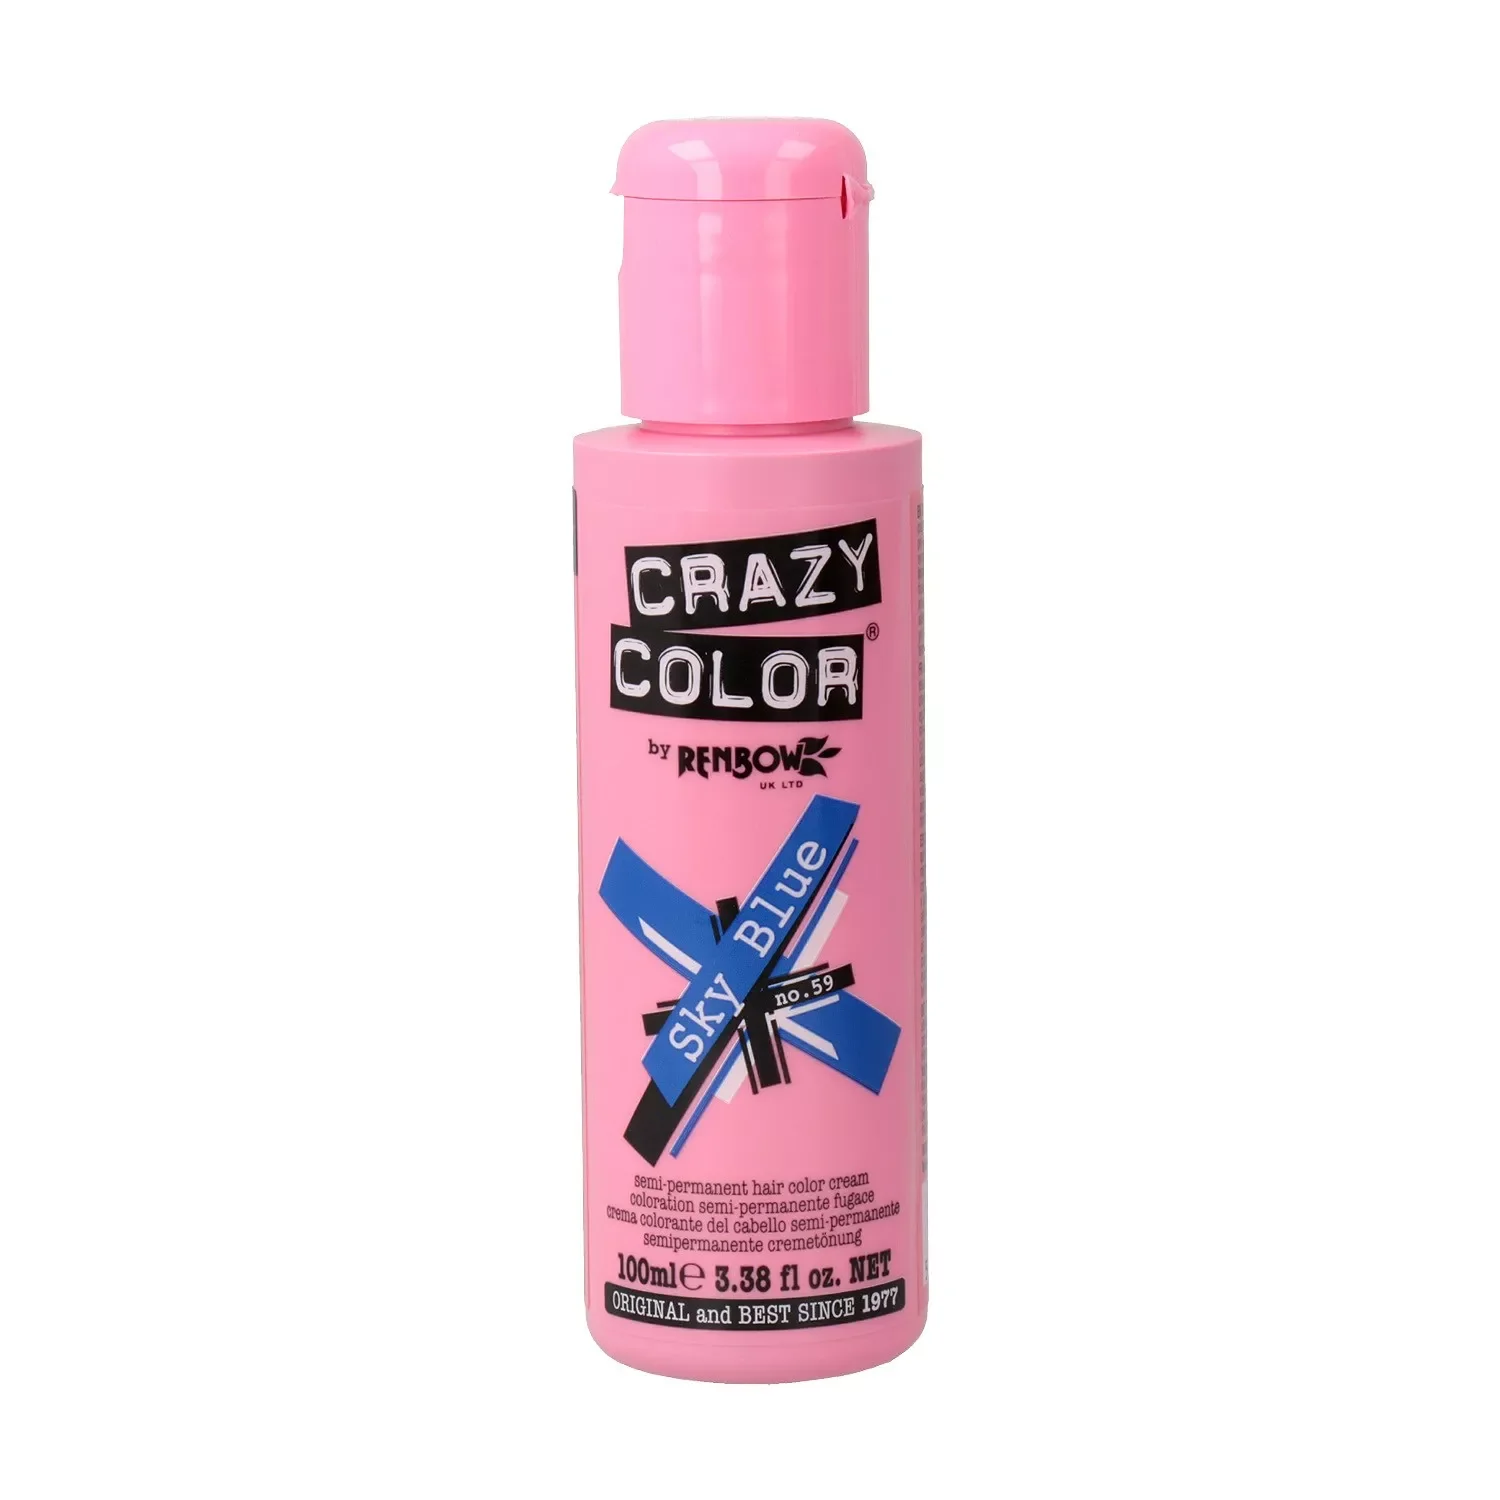 

NEW IN Crazy color 59 sky blue 100 ml, tinte semi-permanente para uso sobre cabello decolorado.